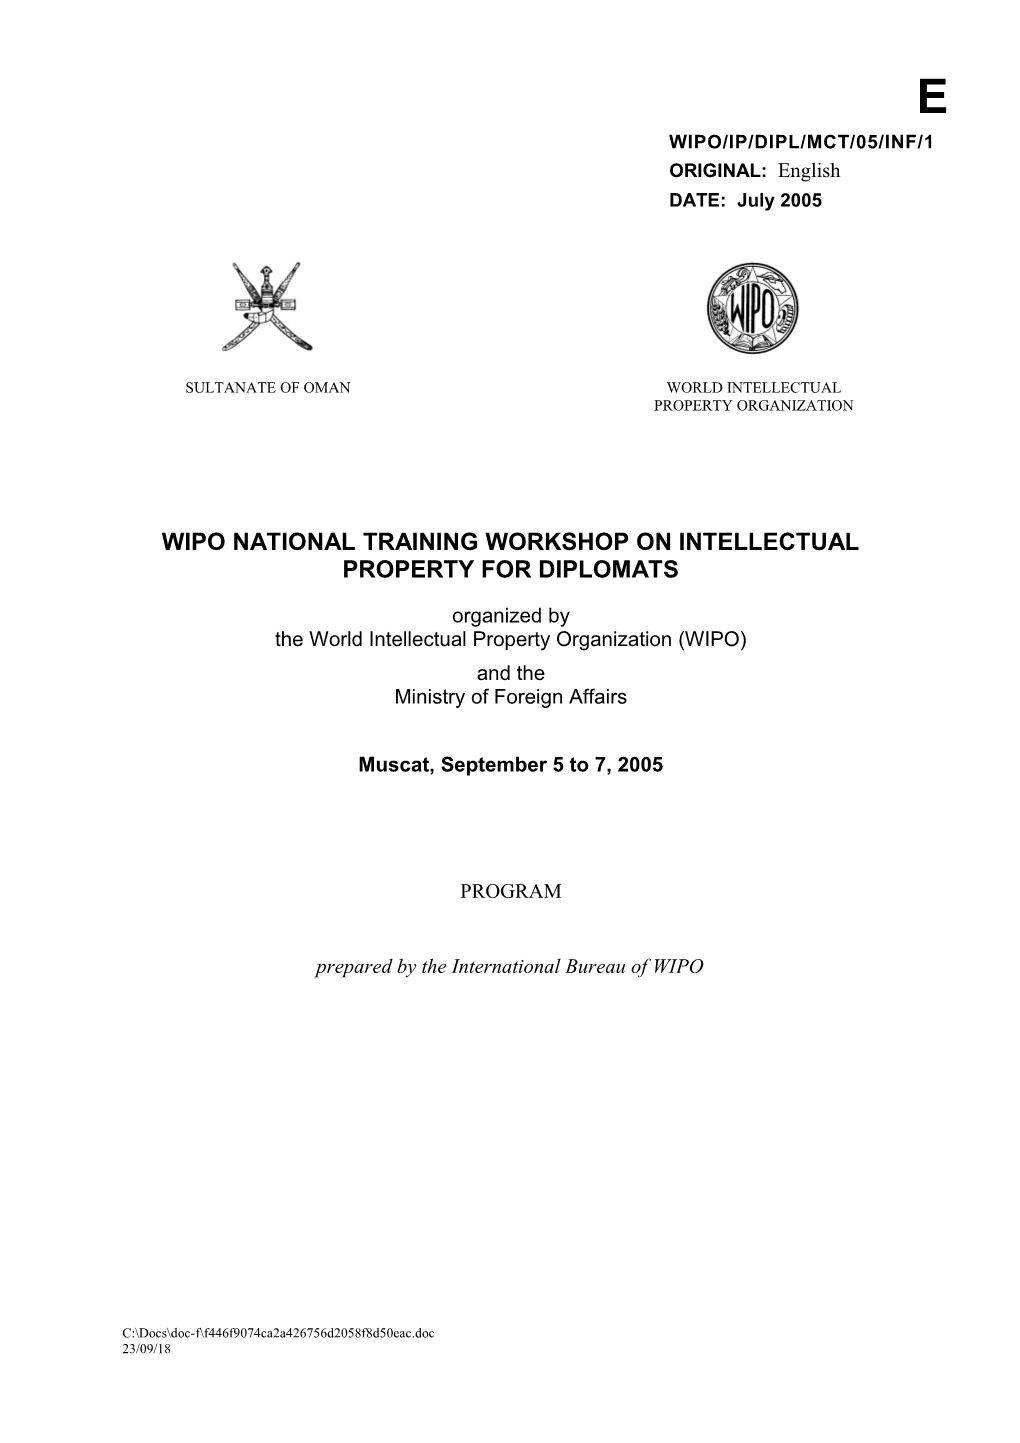 WIPO/IP/DIPL/MCT/05/INF/1: Progam